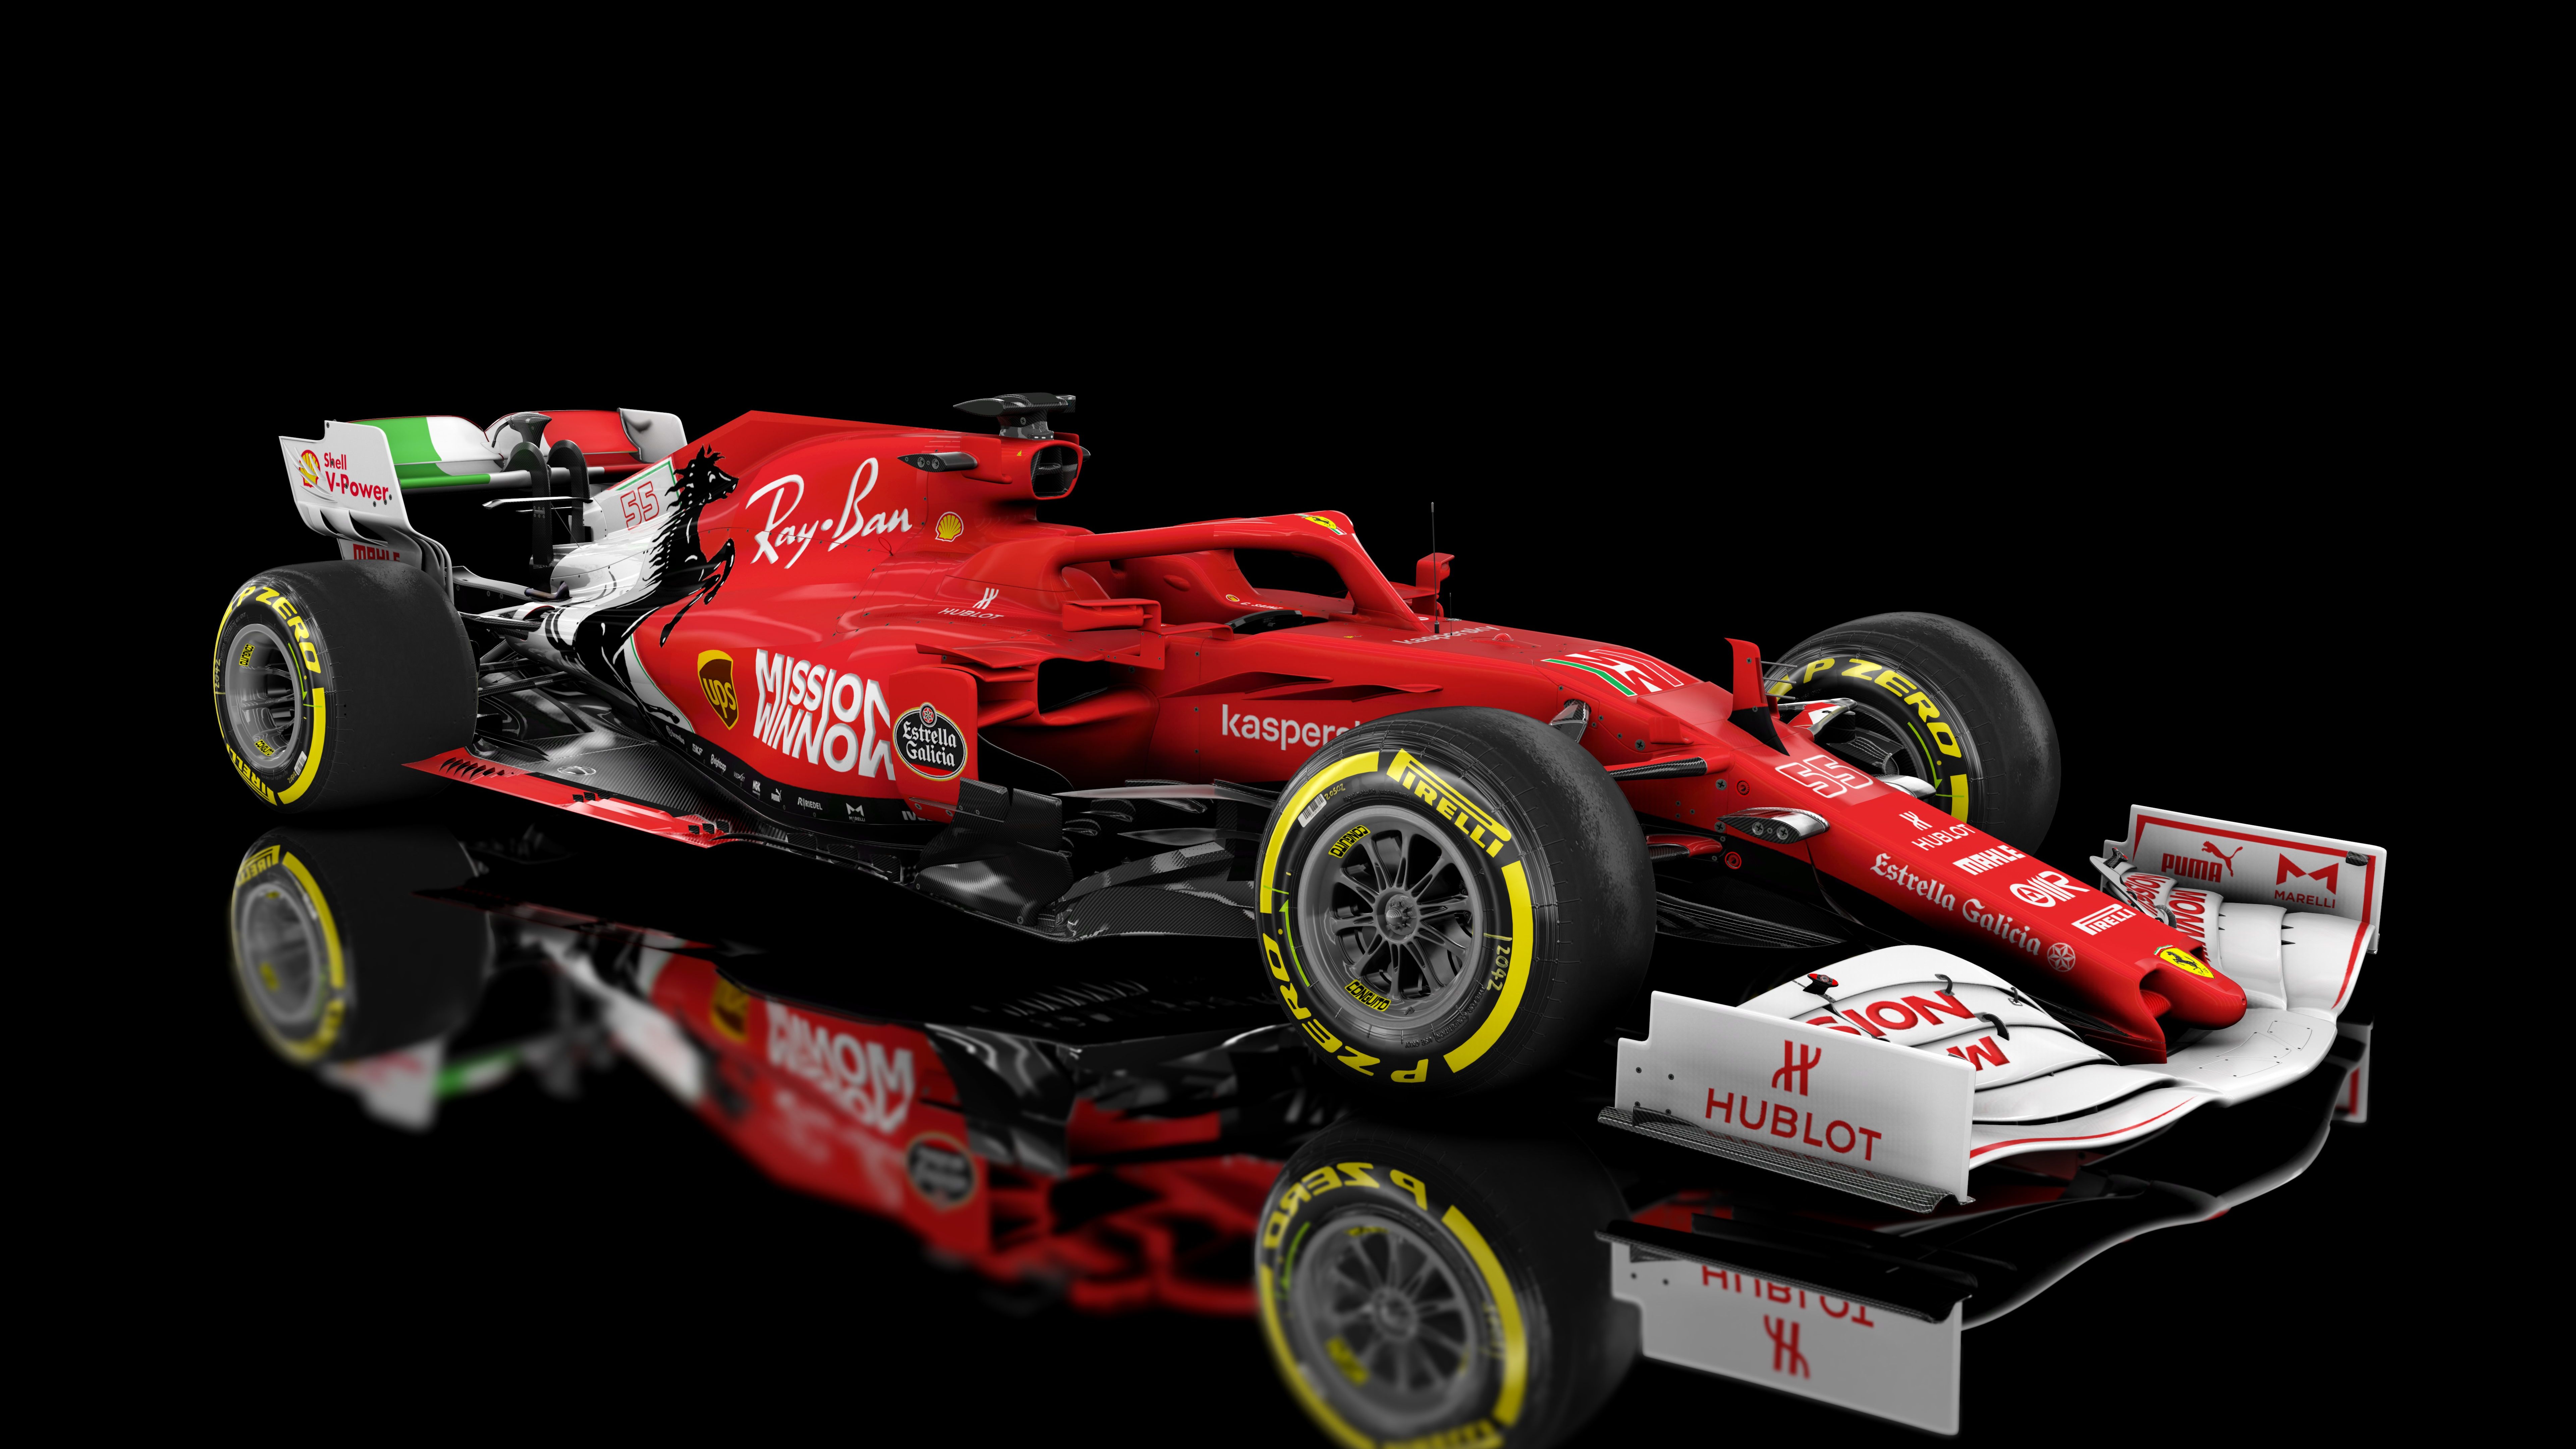 Ferrari F1 Concept